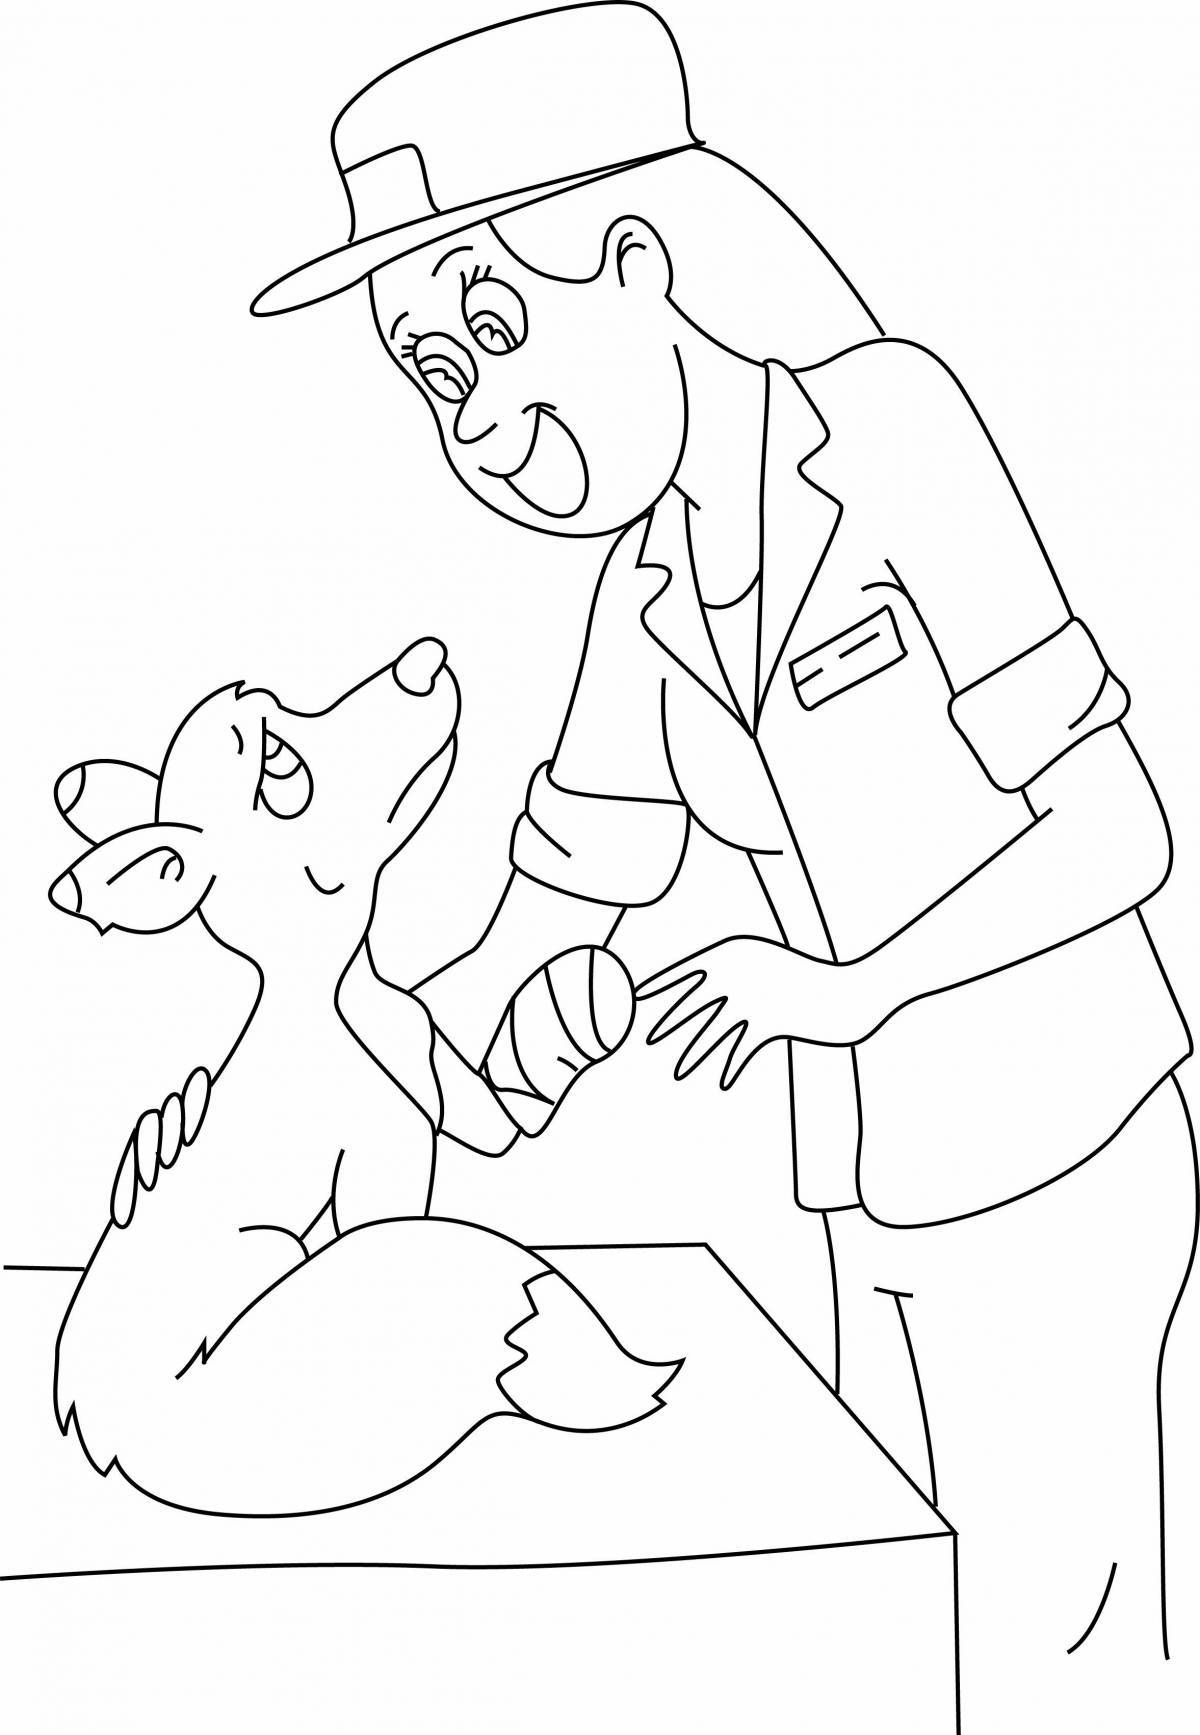 Joyful veterinarian coloring page